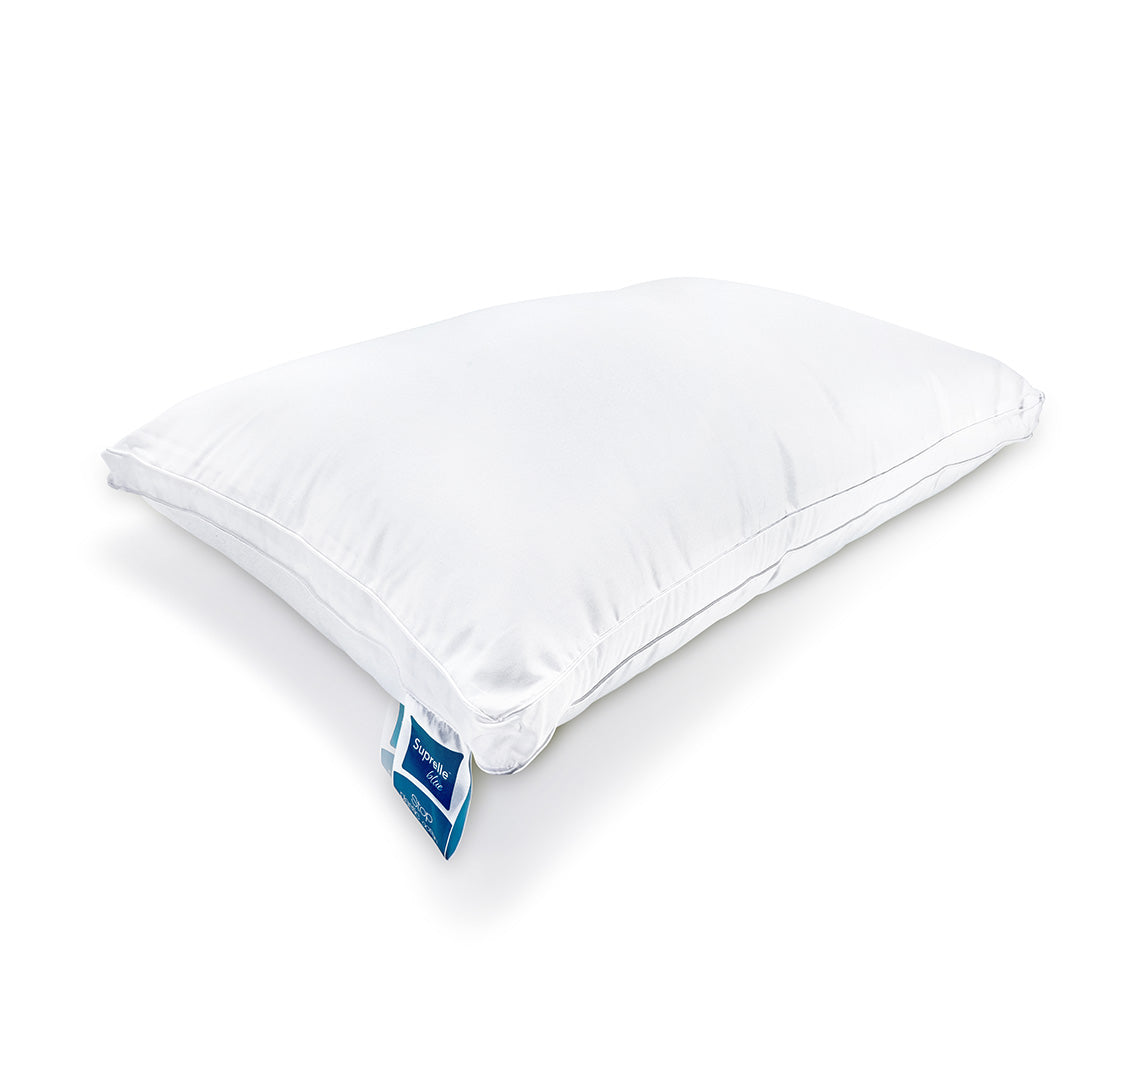 Suprelle Blue Pillow